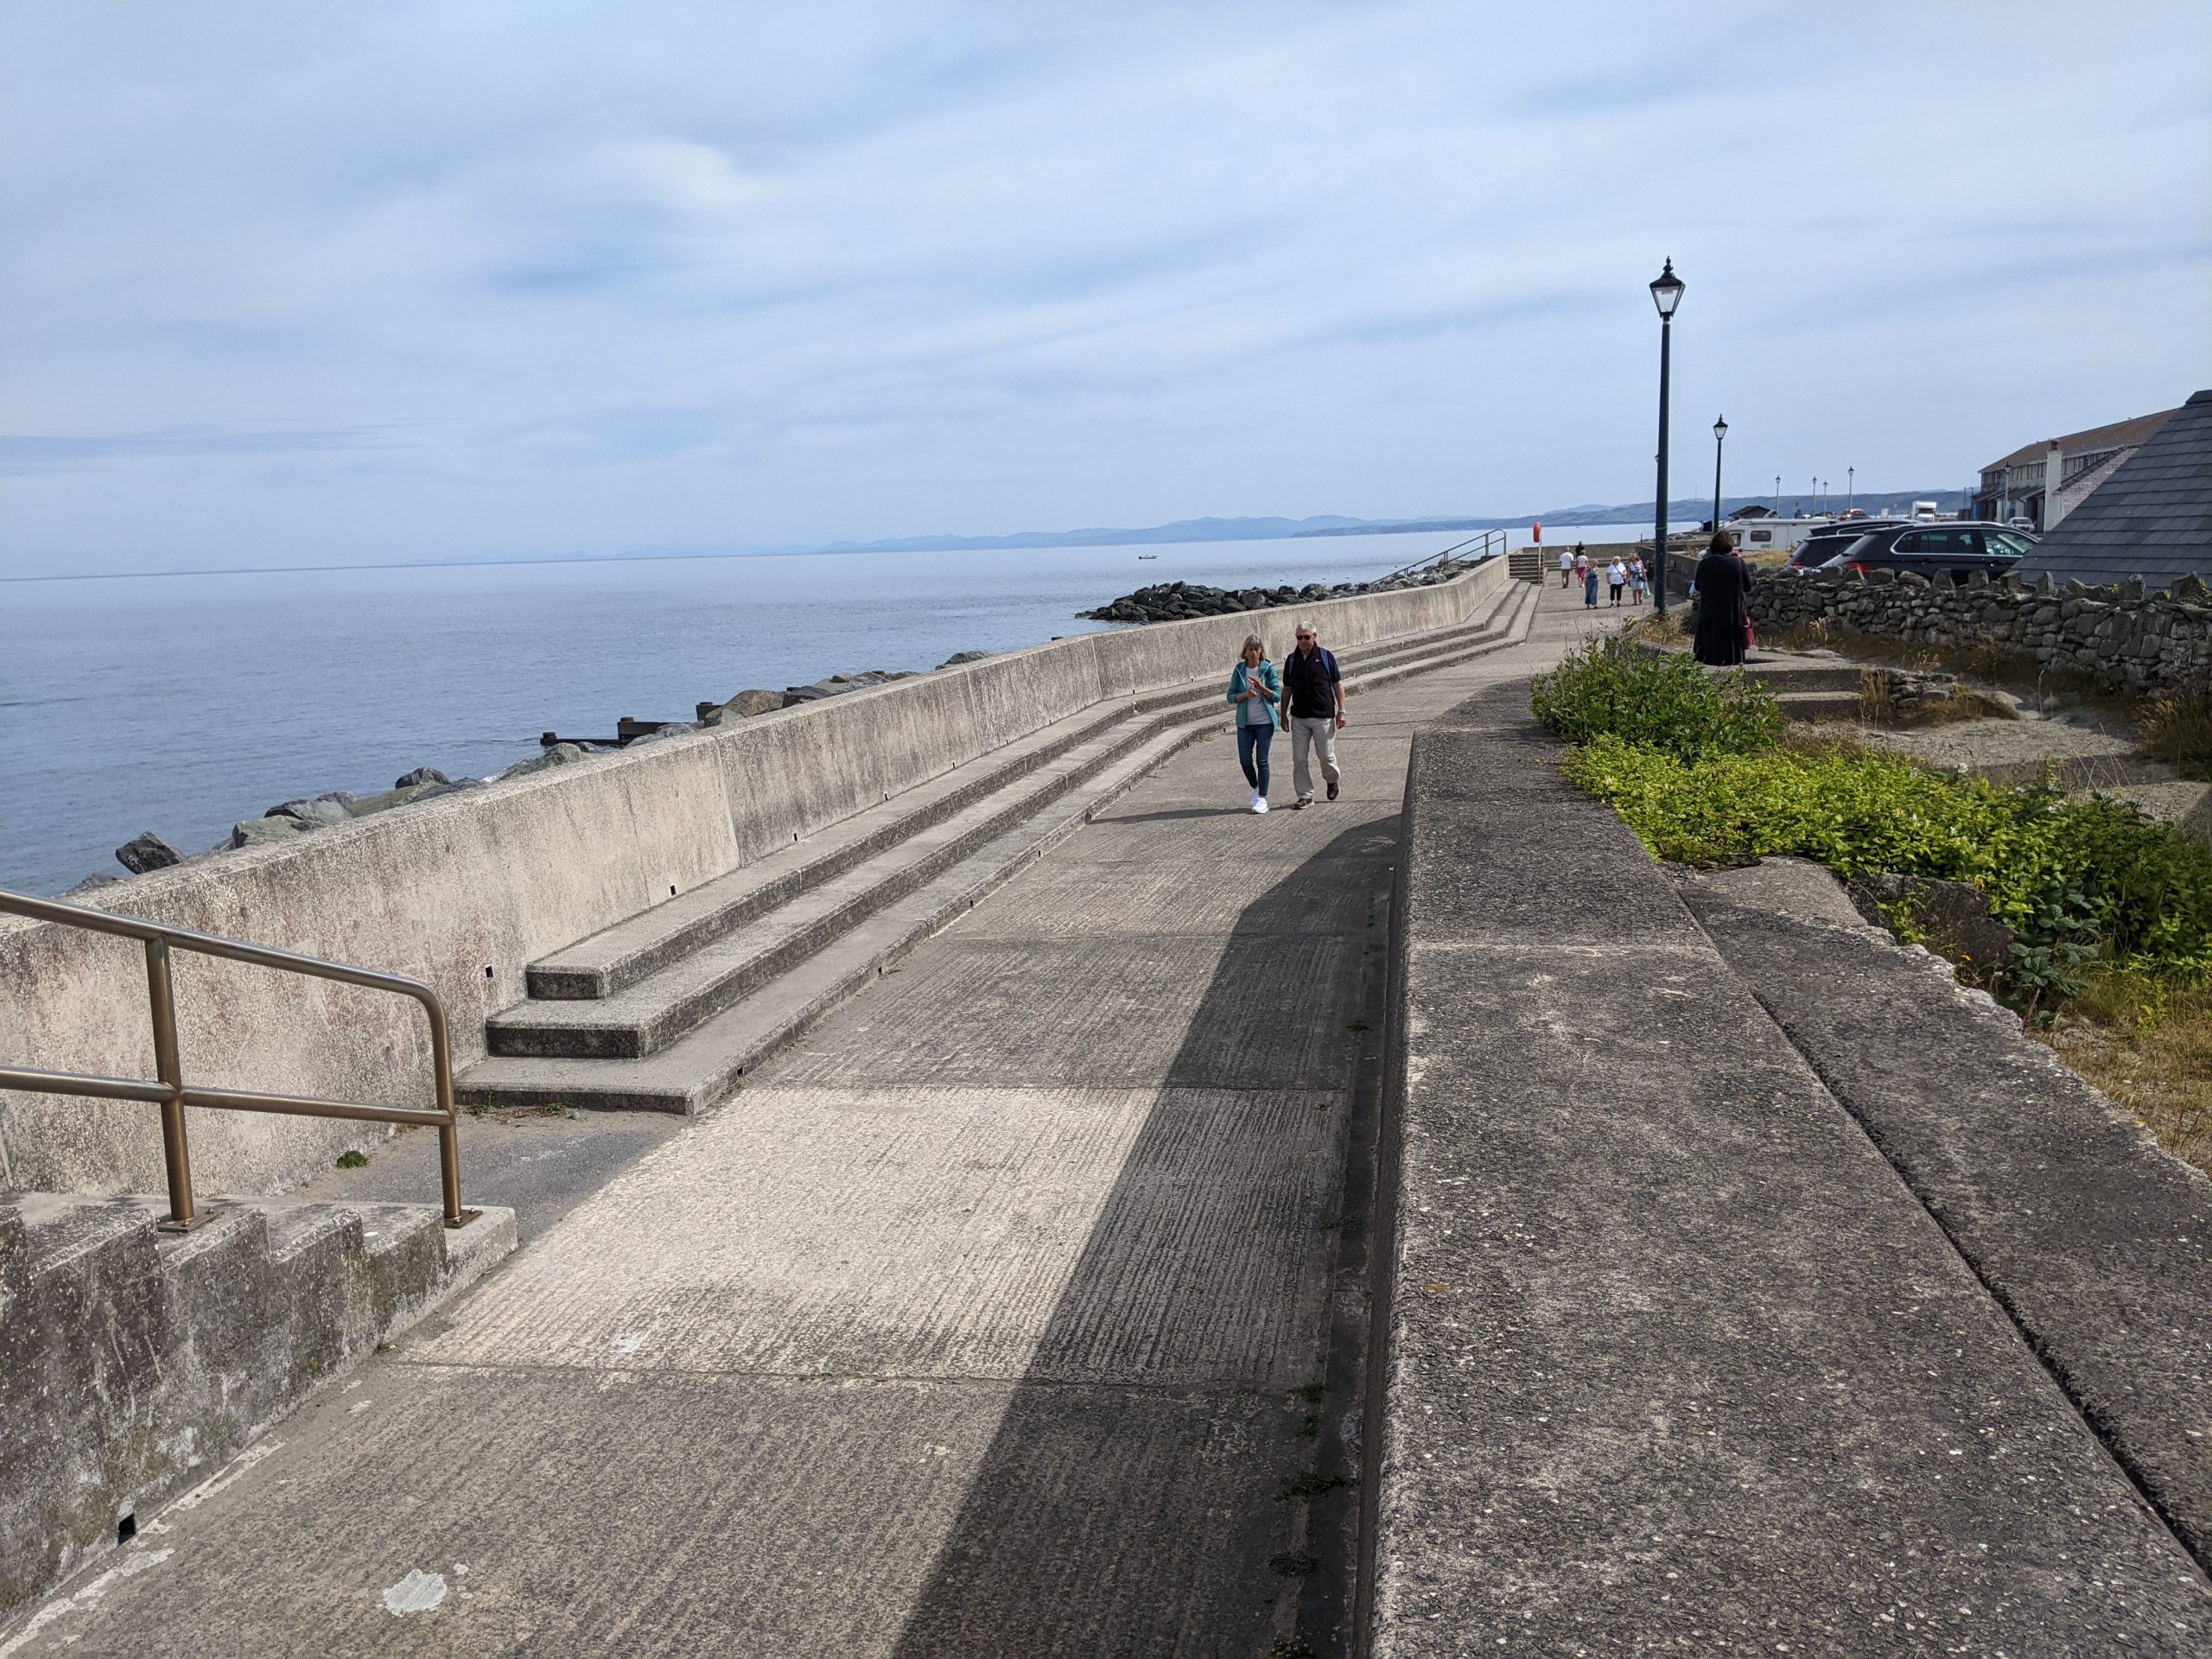 Concrete coastal promenade with people walking along